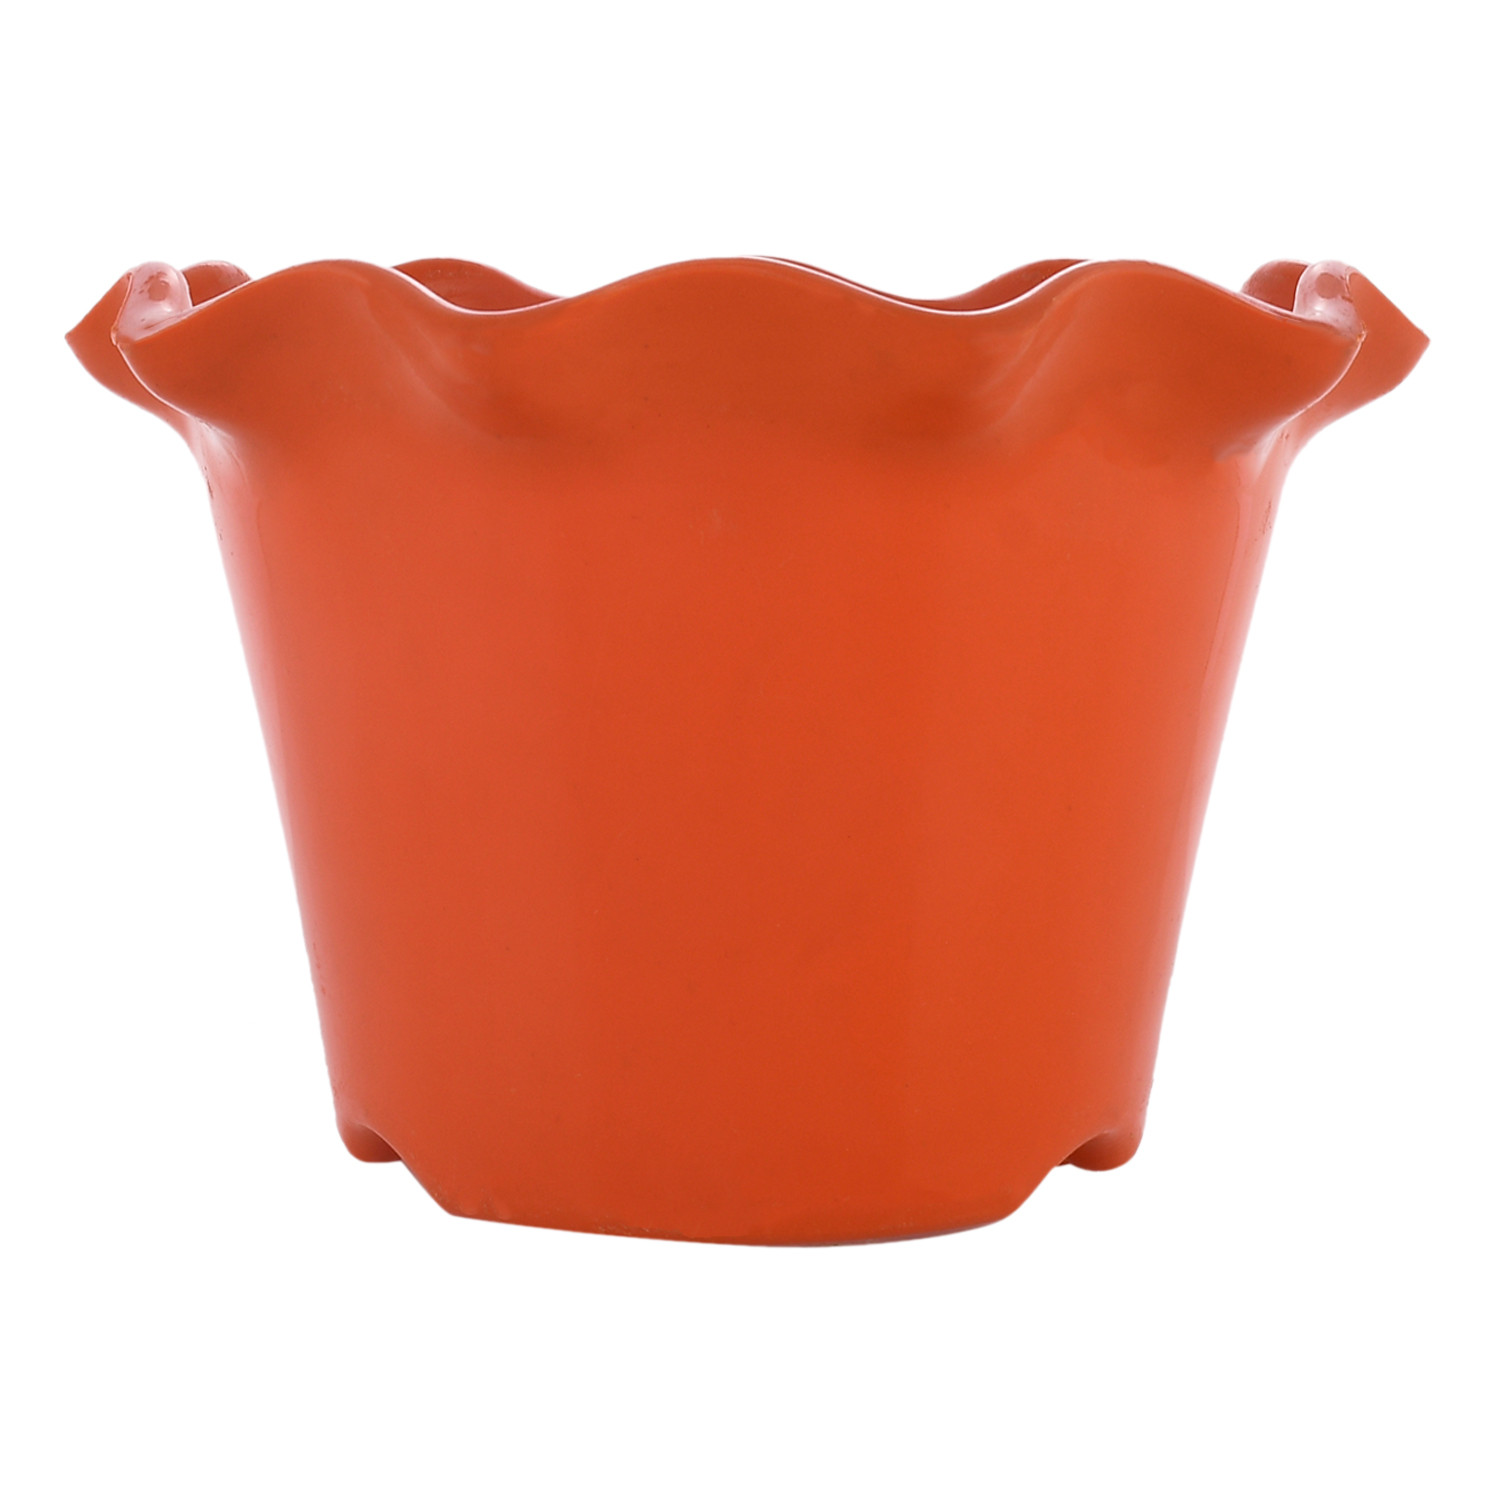 Kuber Industries Blossom Flower Pot|Durable Plastic Flower Pots|Planters for Home Décor|Garden|Living Room|Balcony|Pack of 2 (Orange & Green)